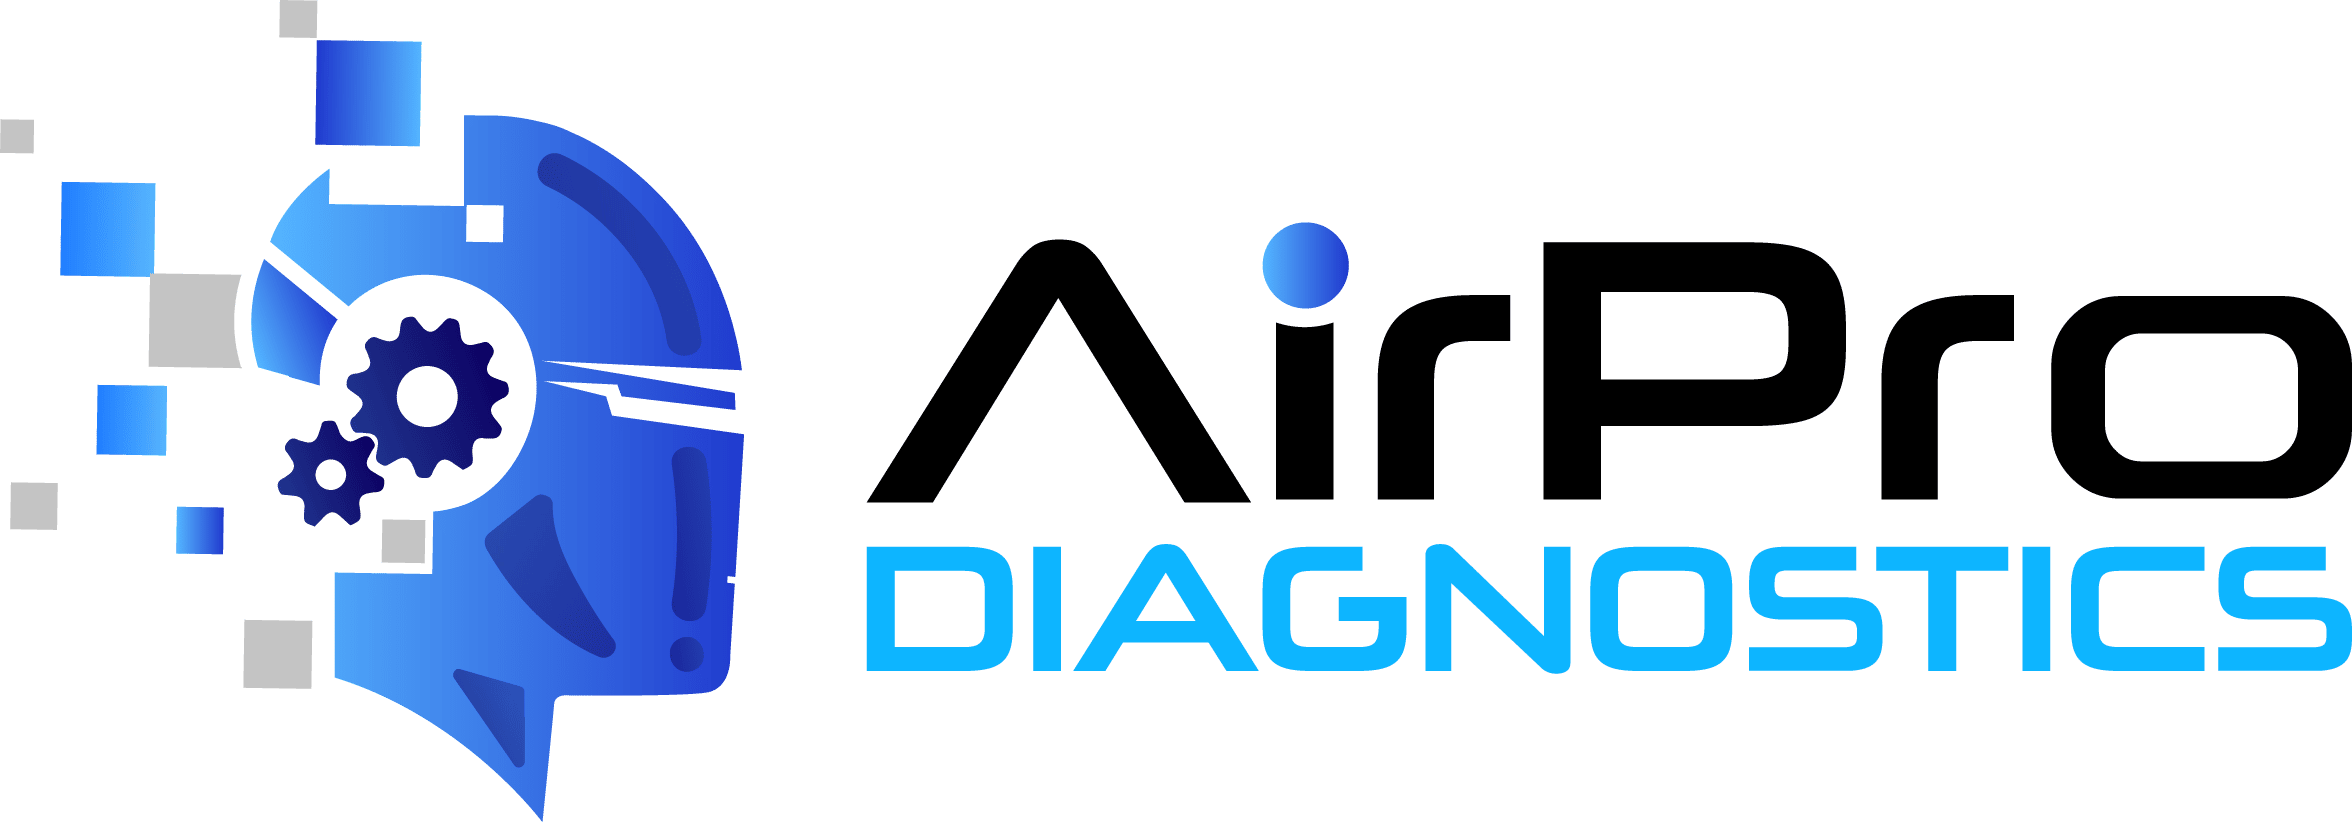 AirPro Diagnostics | Remote Diagnostics & ADAS Scanning | AirPro Diagnostics Welcomes Fred Iantorno to Team | AirPro Diagnostics | Remote Diagnostics & ADAS Scanning